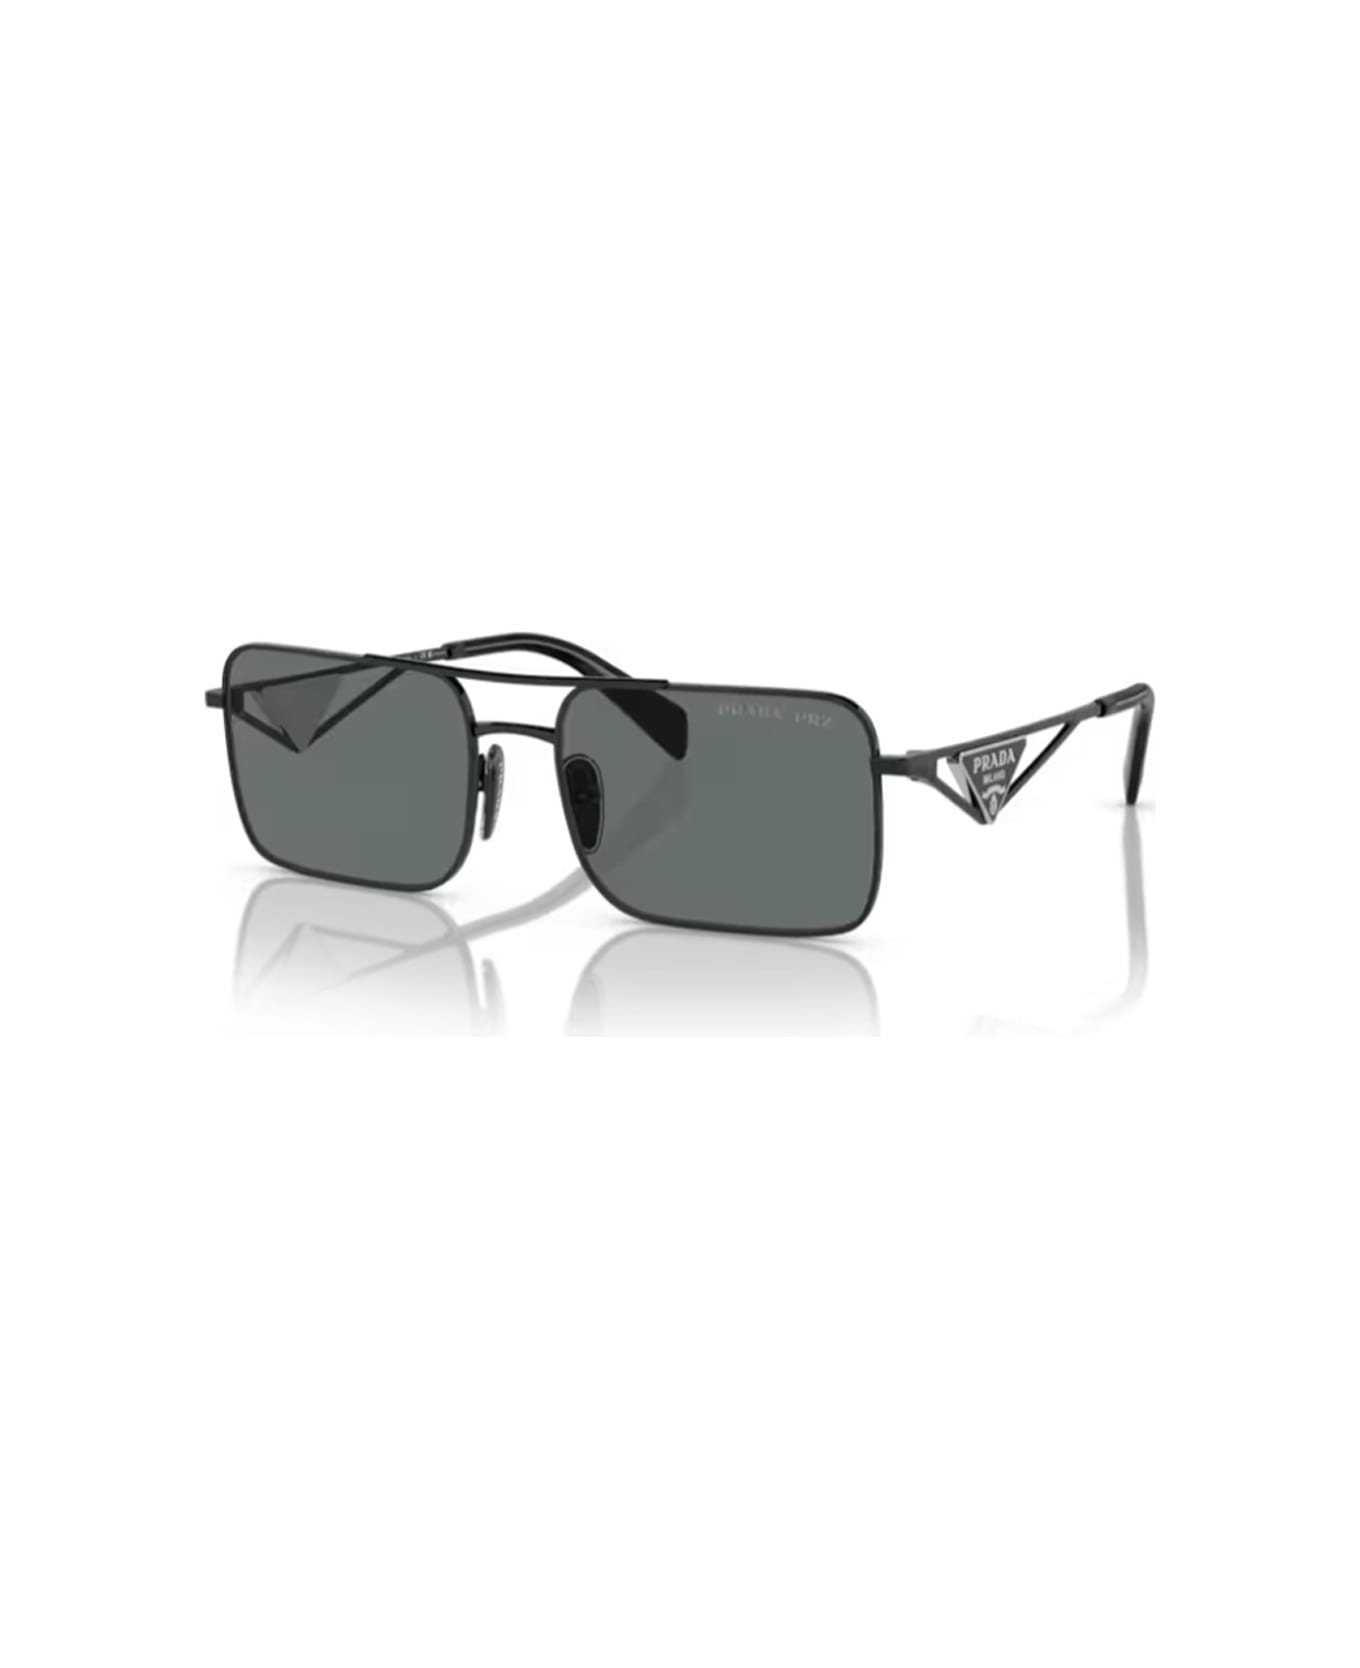 Prada Eyewear Pra52s 1ab5z1 Sunglasses RGE - Nero